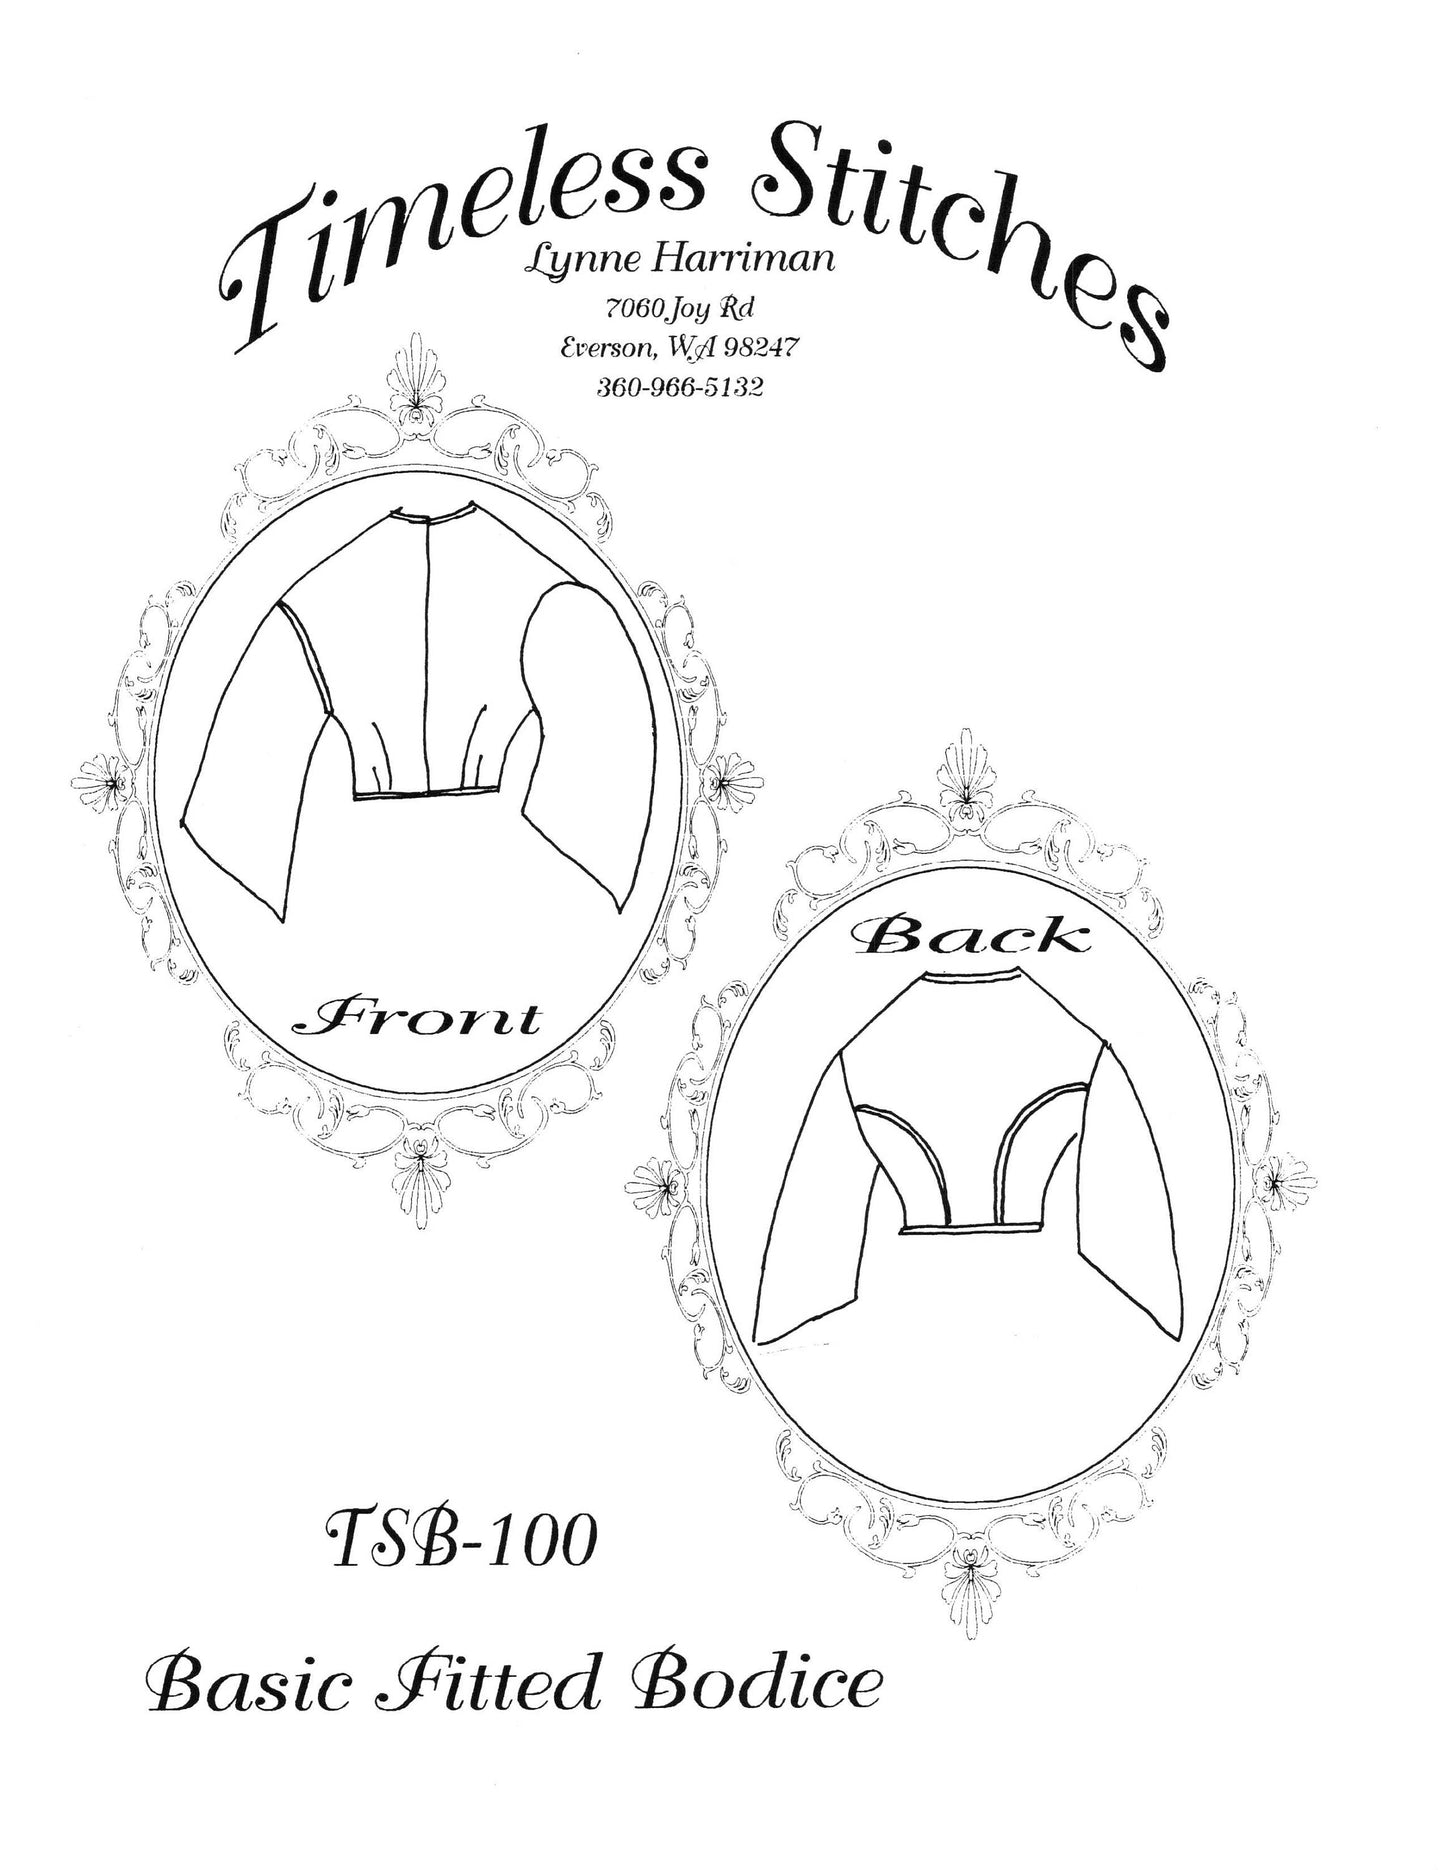 Basic Fitted Bodice / 19th Century/ Civil War Era Bodice Pattern/ Timeless Stitches Sewing Pattern TSB-100